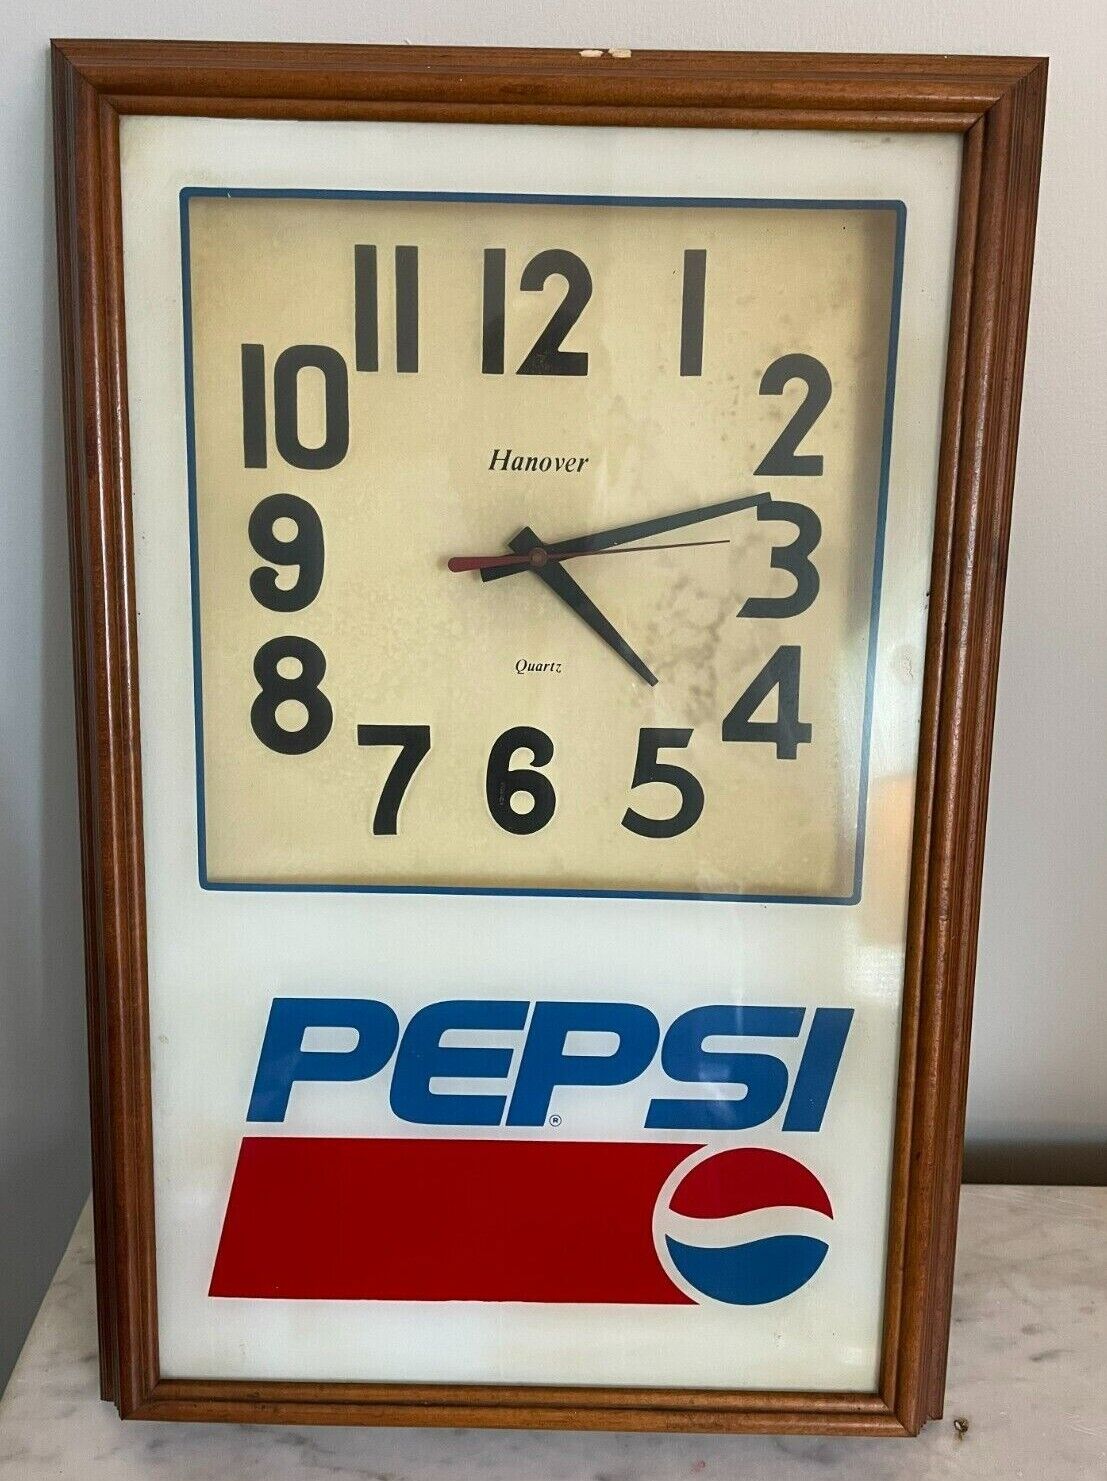 Pepsi Wall Clock Vintage Hanover Quartz Battery Wood Frame Works Perfect